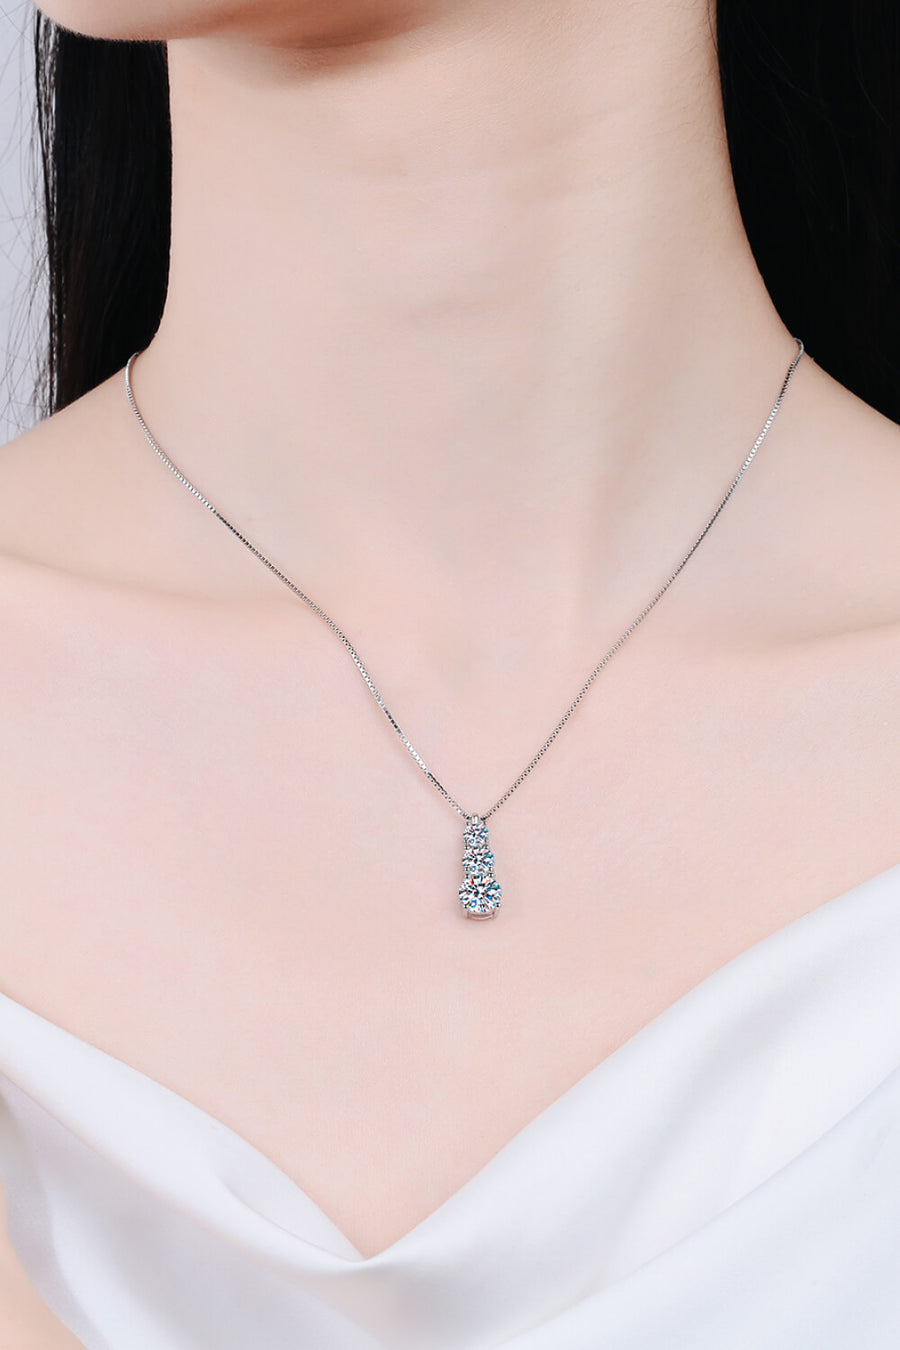 Best Diamond Jewelry Bundle Set Gift | Best Triple Diamond Necklace, Earrings Jewelry Gift for Women, Mother, Wife, Daughter | MASON New York